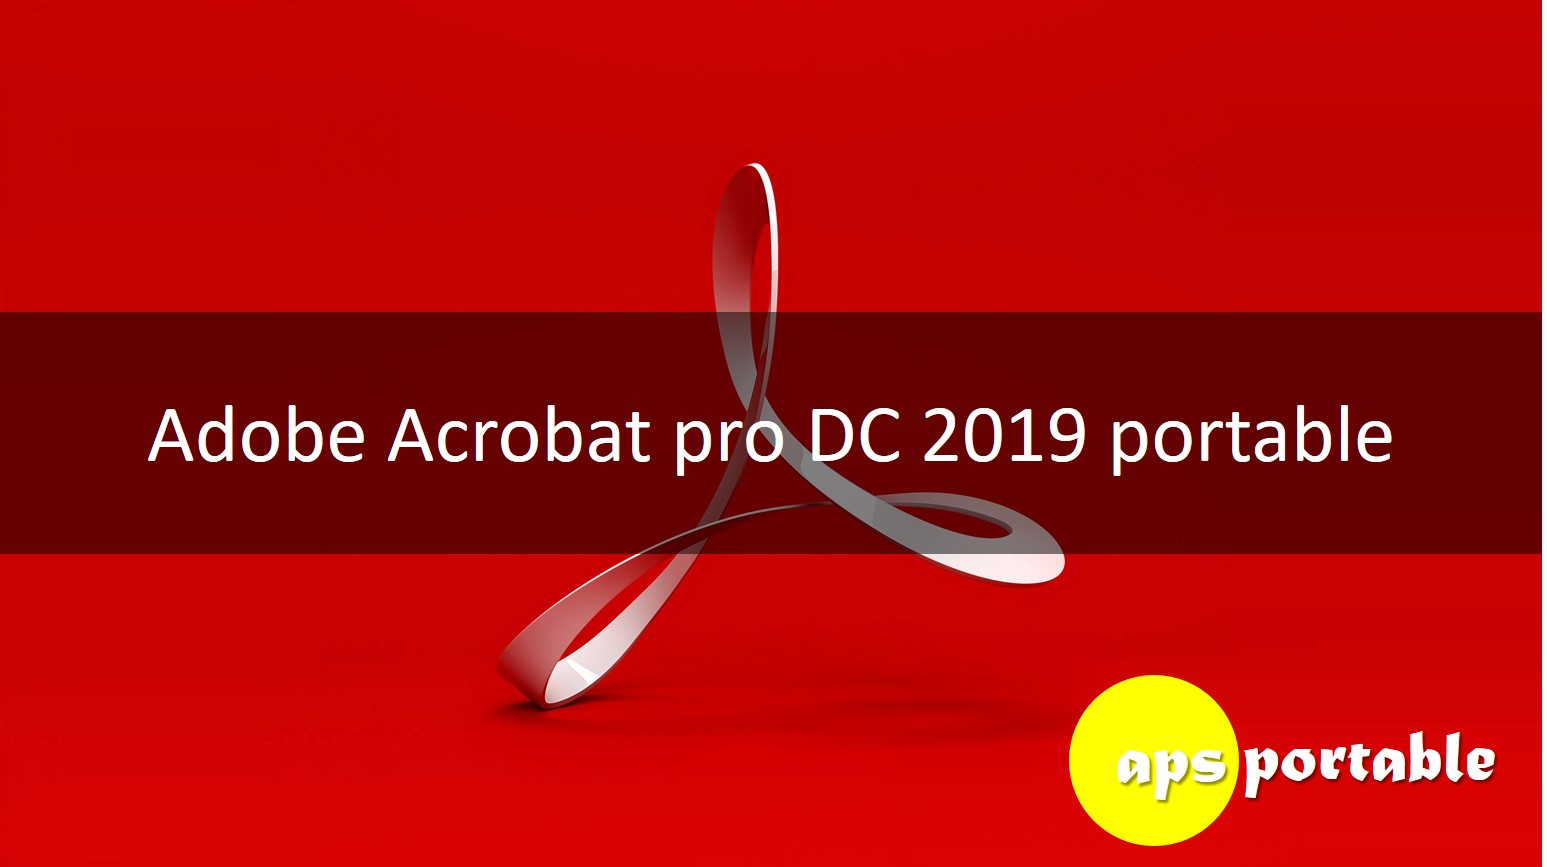 Adobe Acrobat Pro DC 2019 Download Free Full Version For PC